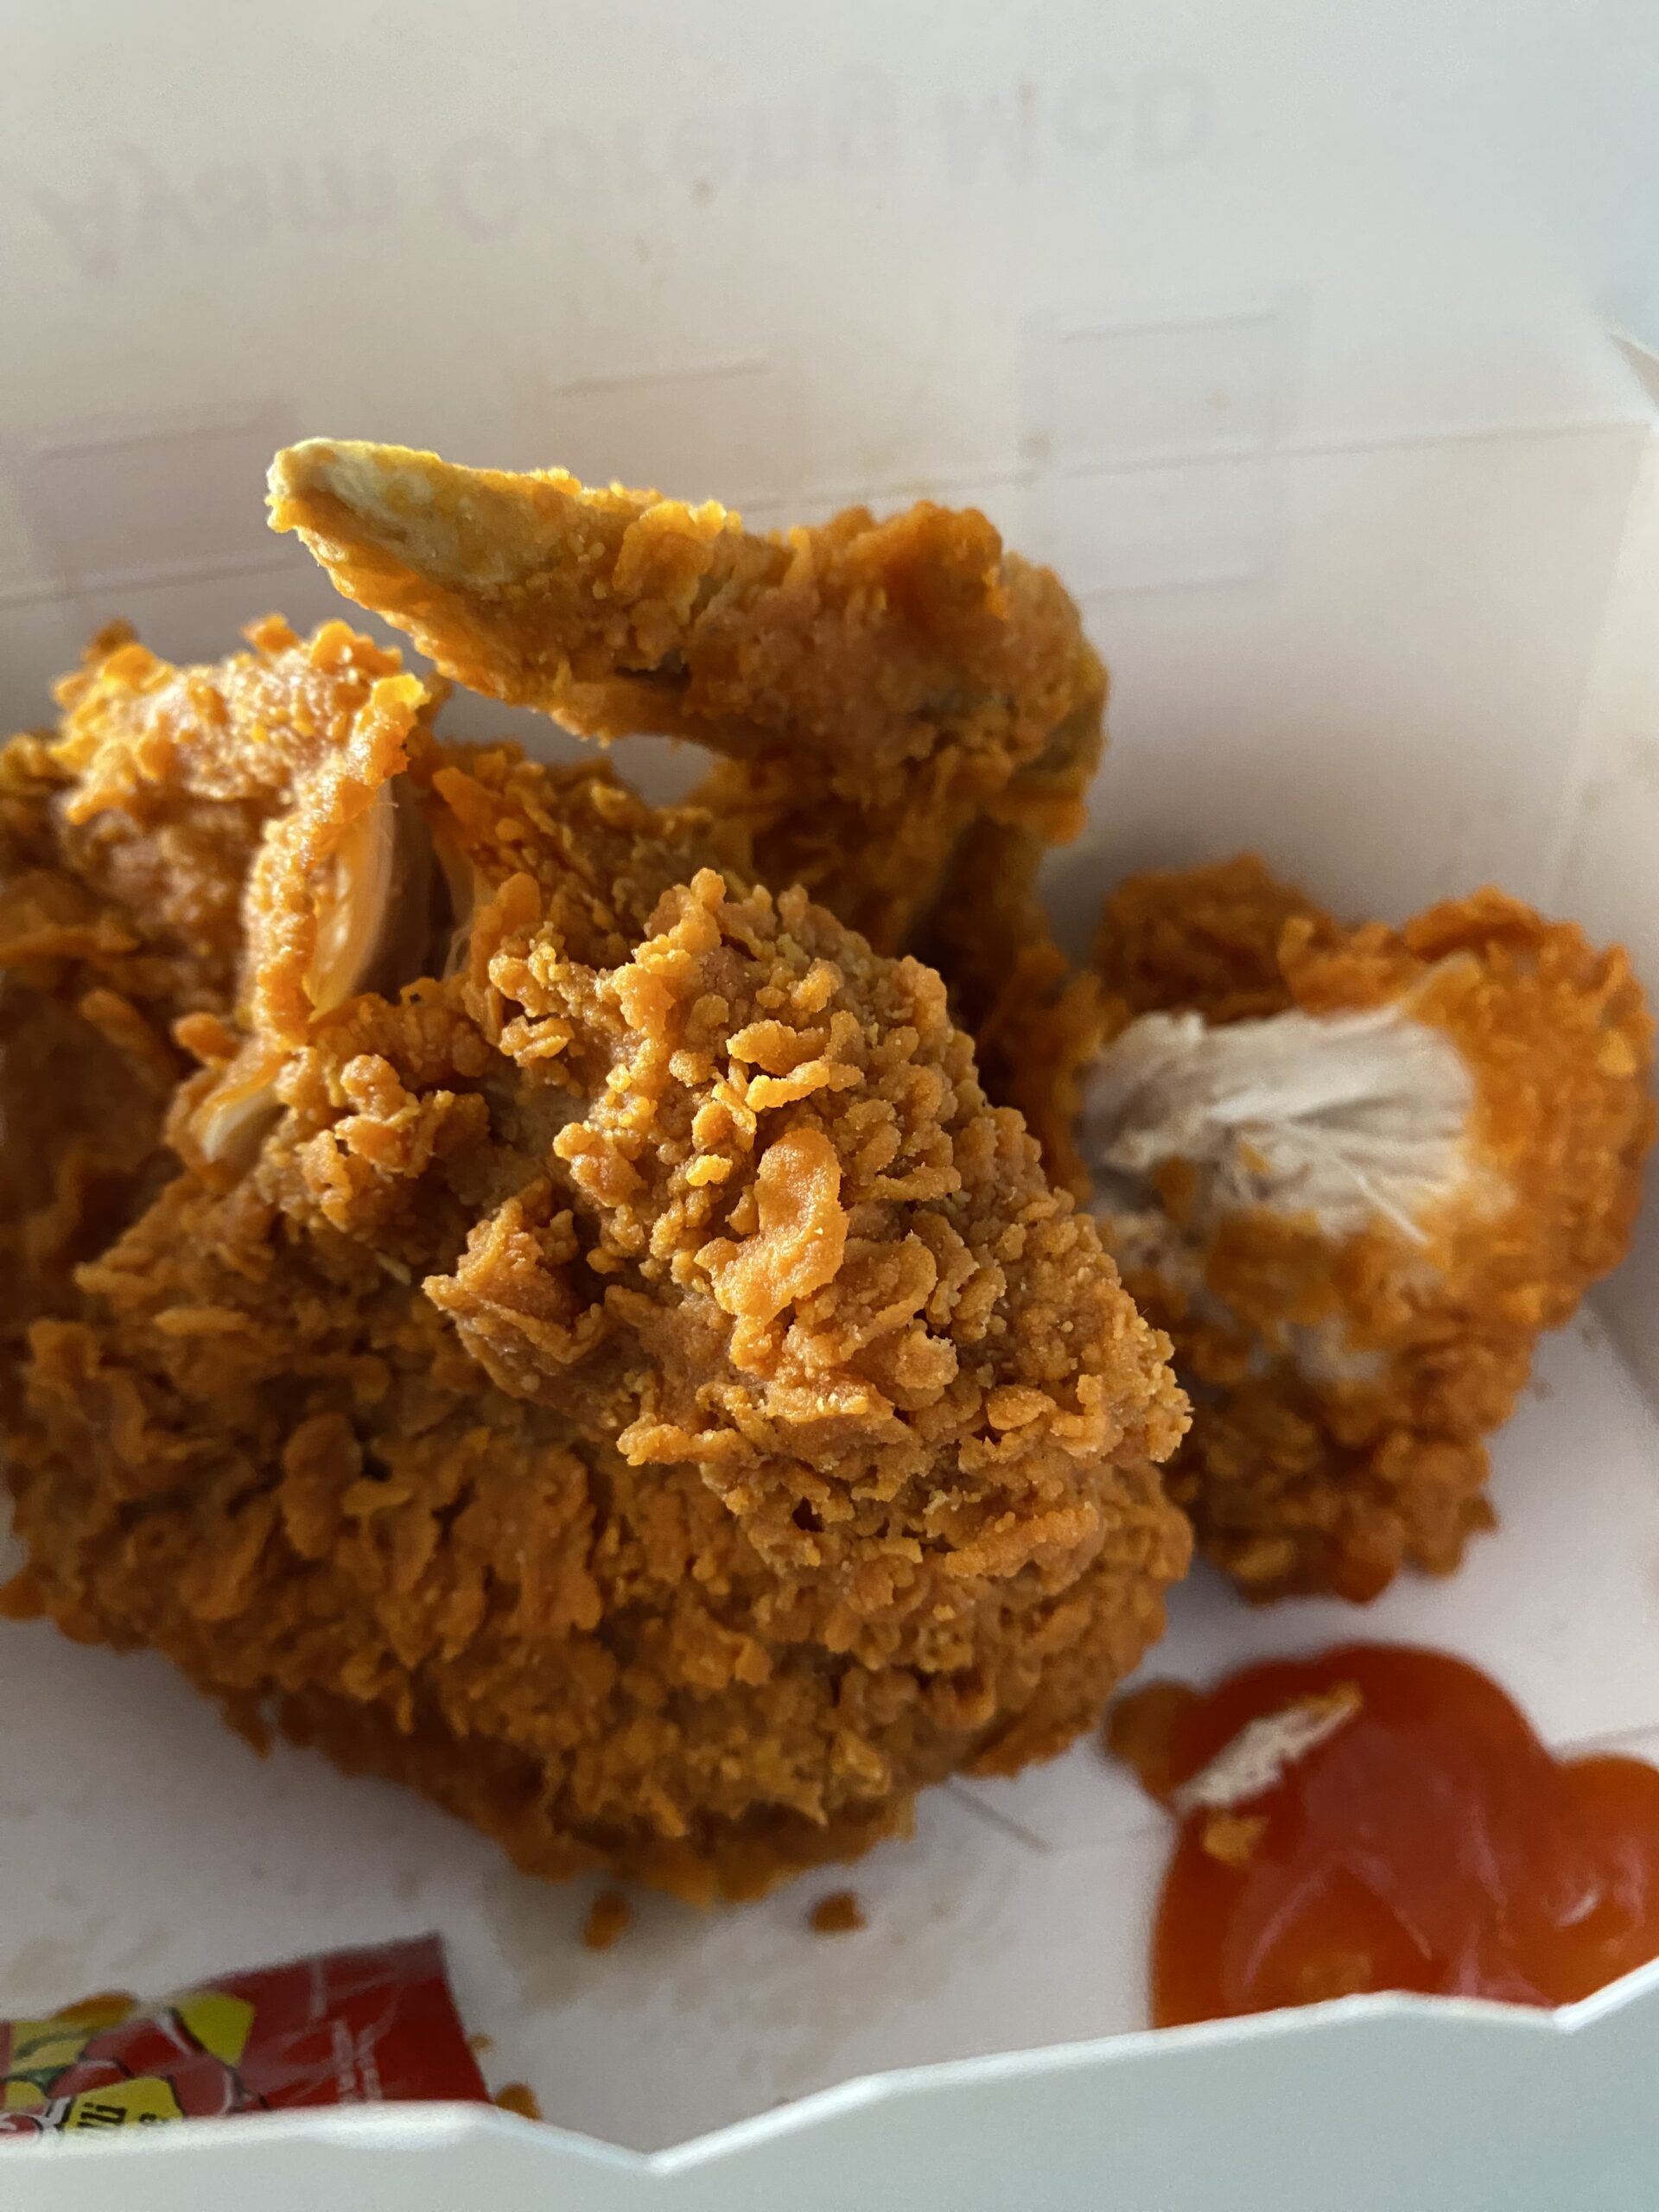 Mcdonald's spicy fried chicken